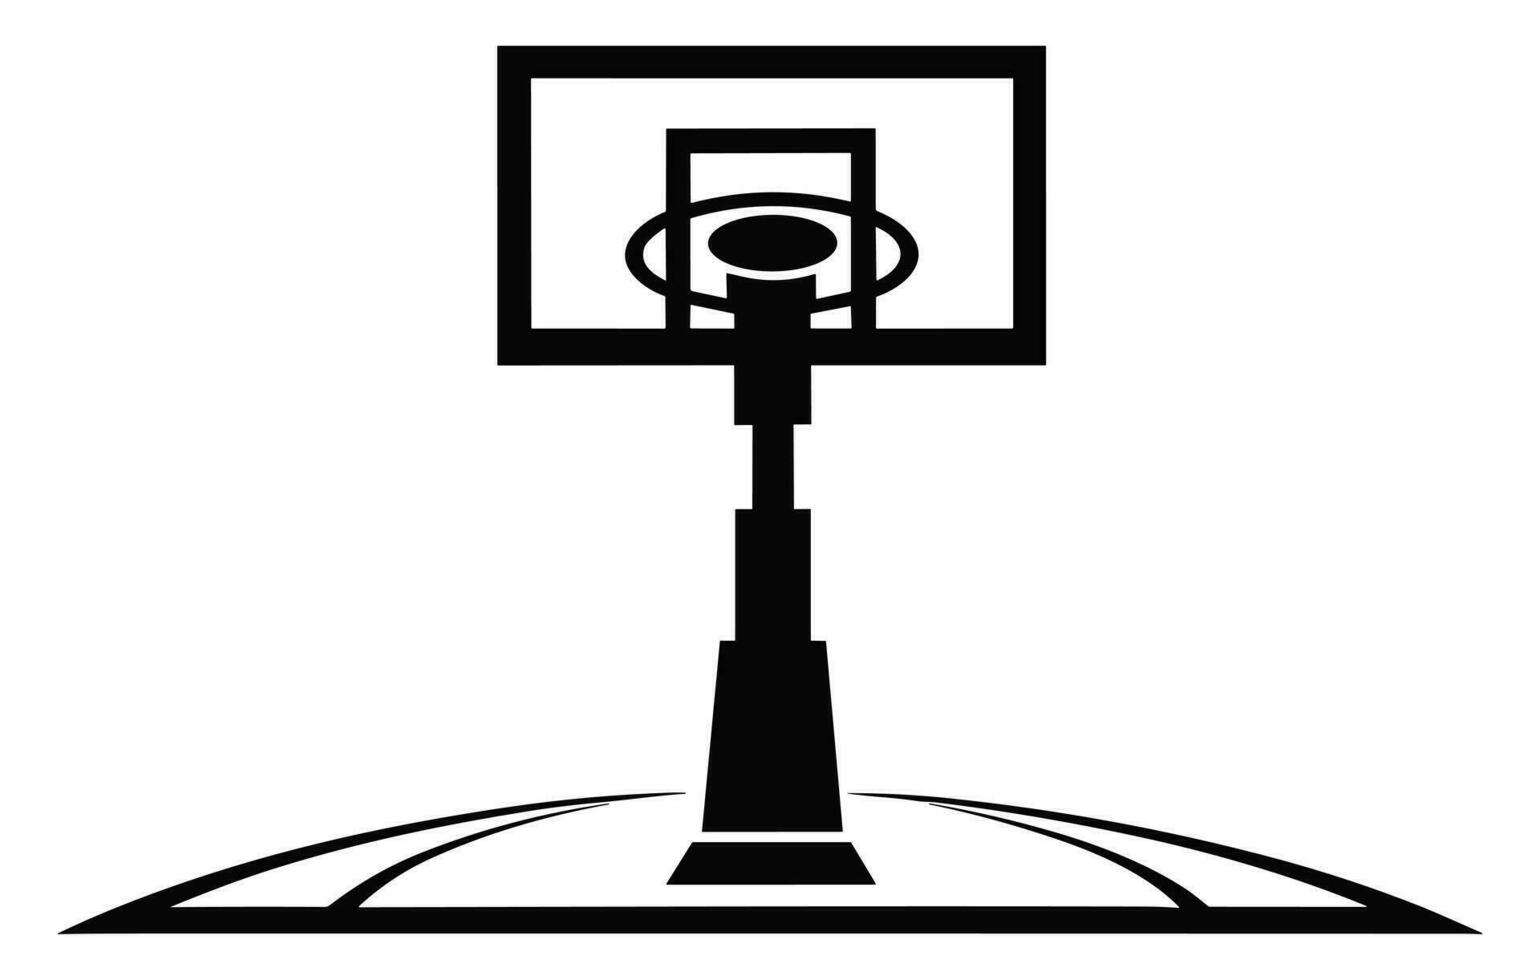 basketball tribunal plat vecteur icône, basket-ball tribunal vecteur noir ligne illustration isolé blanc